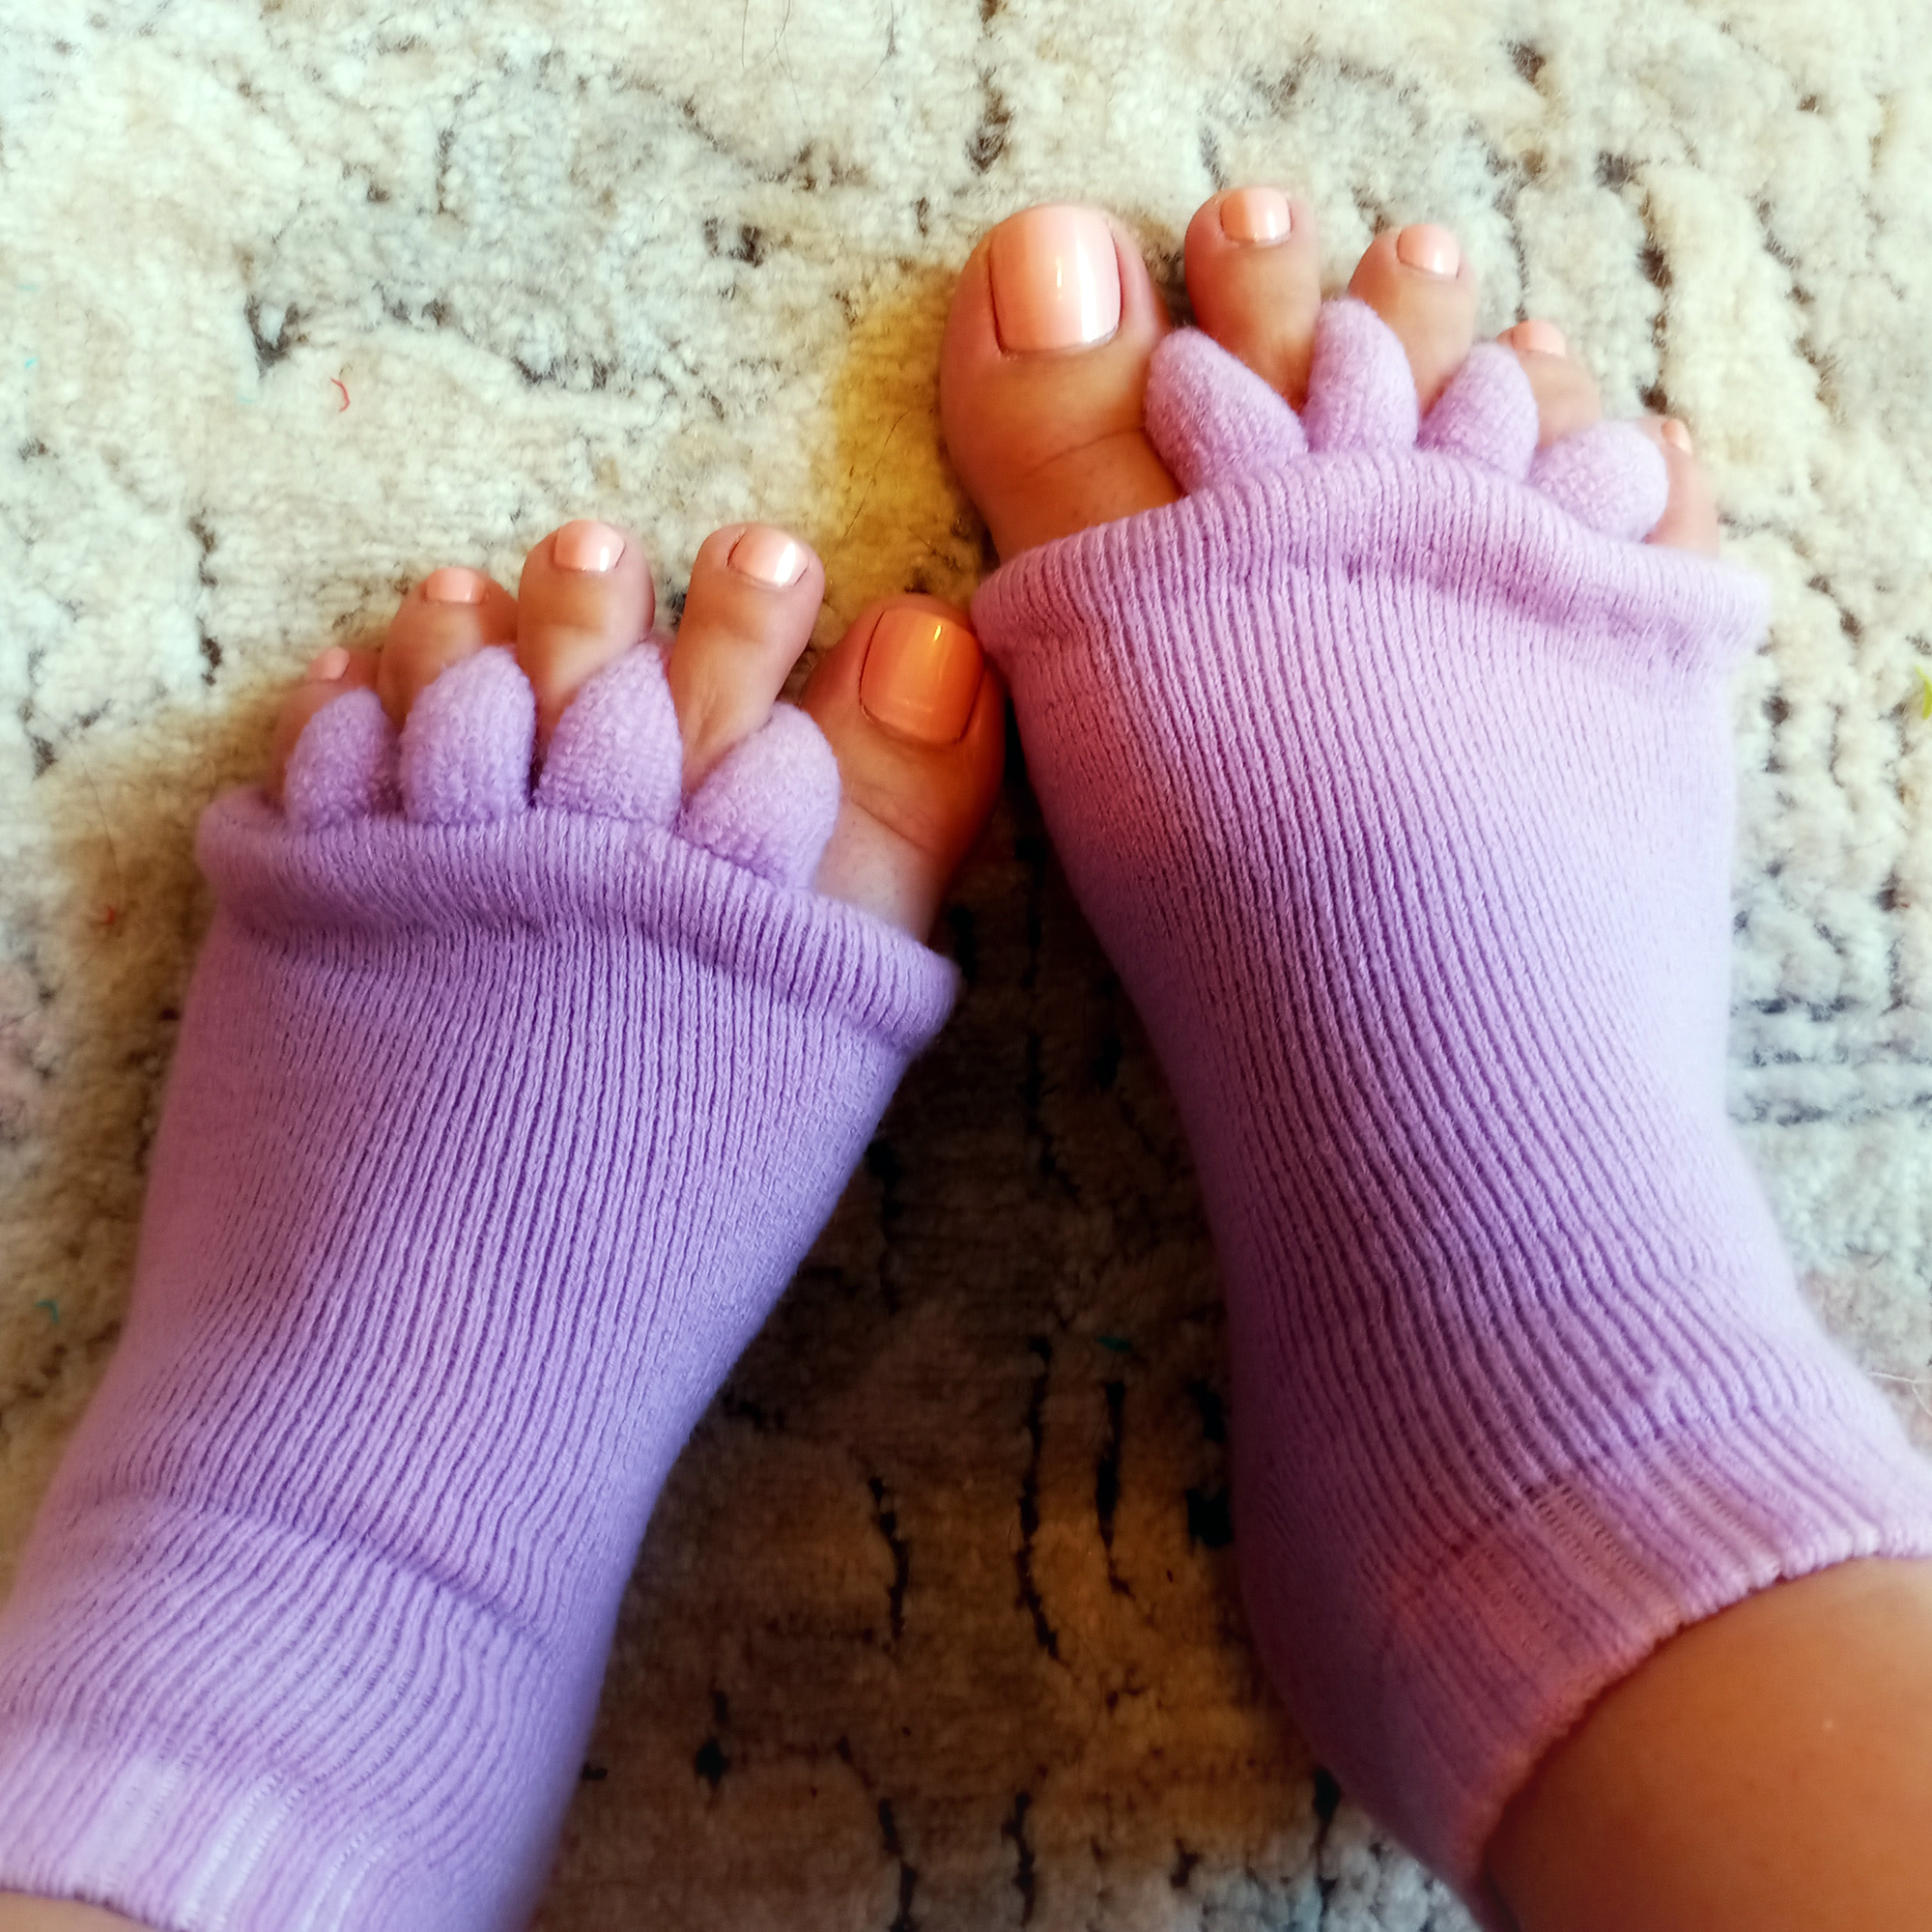  Foot Alignment Socks